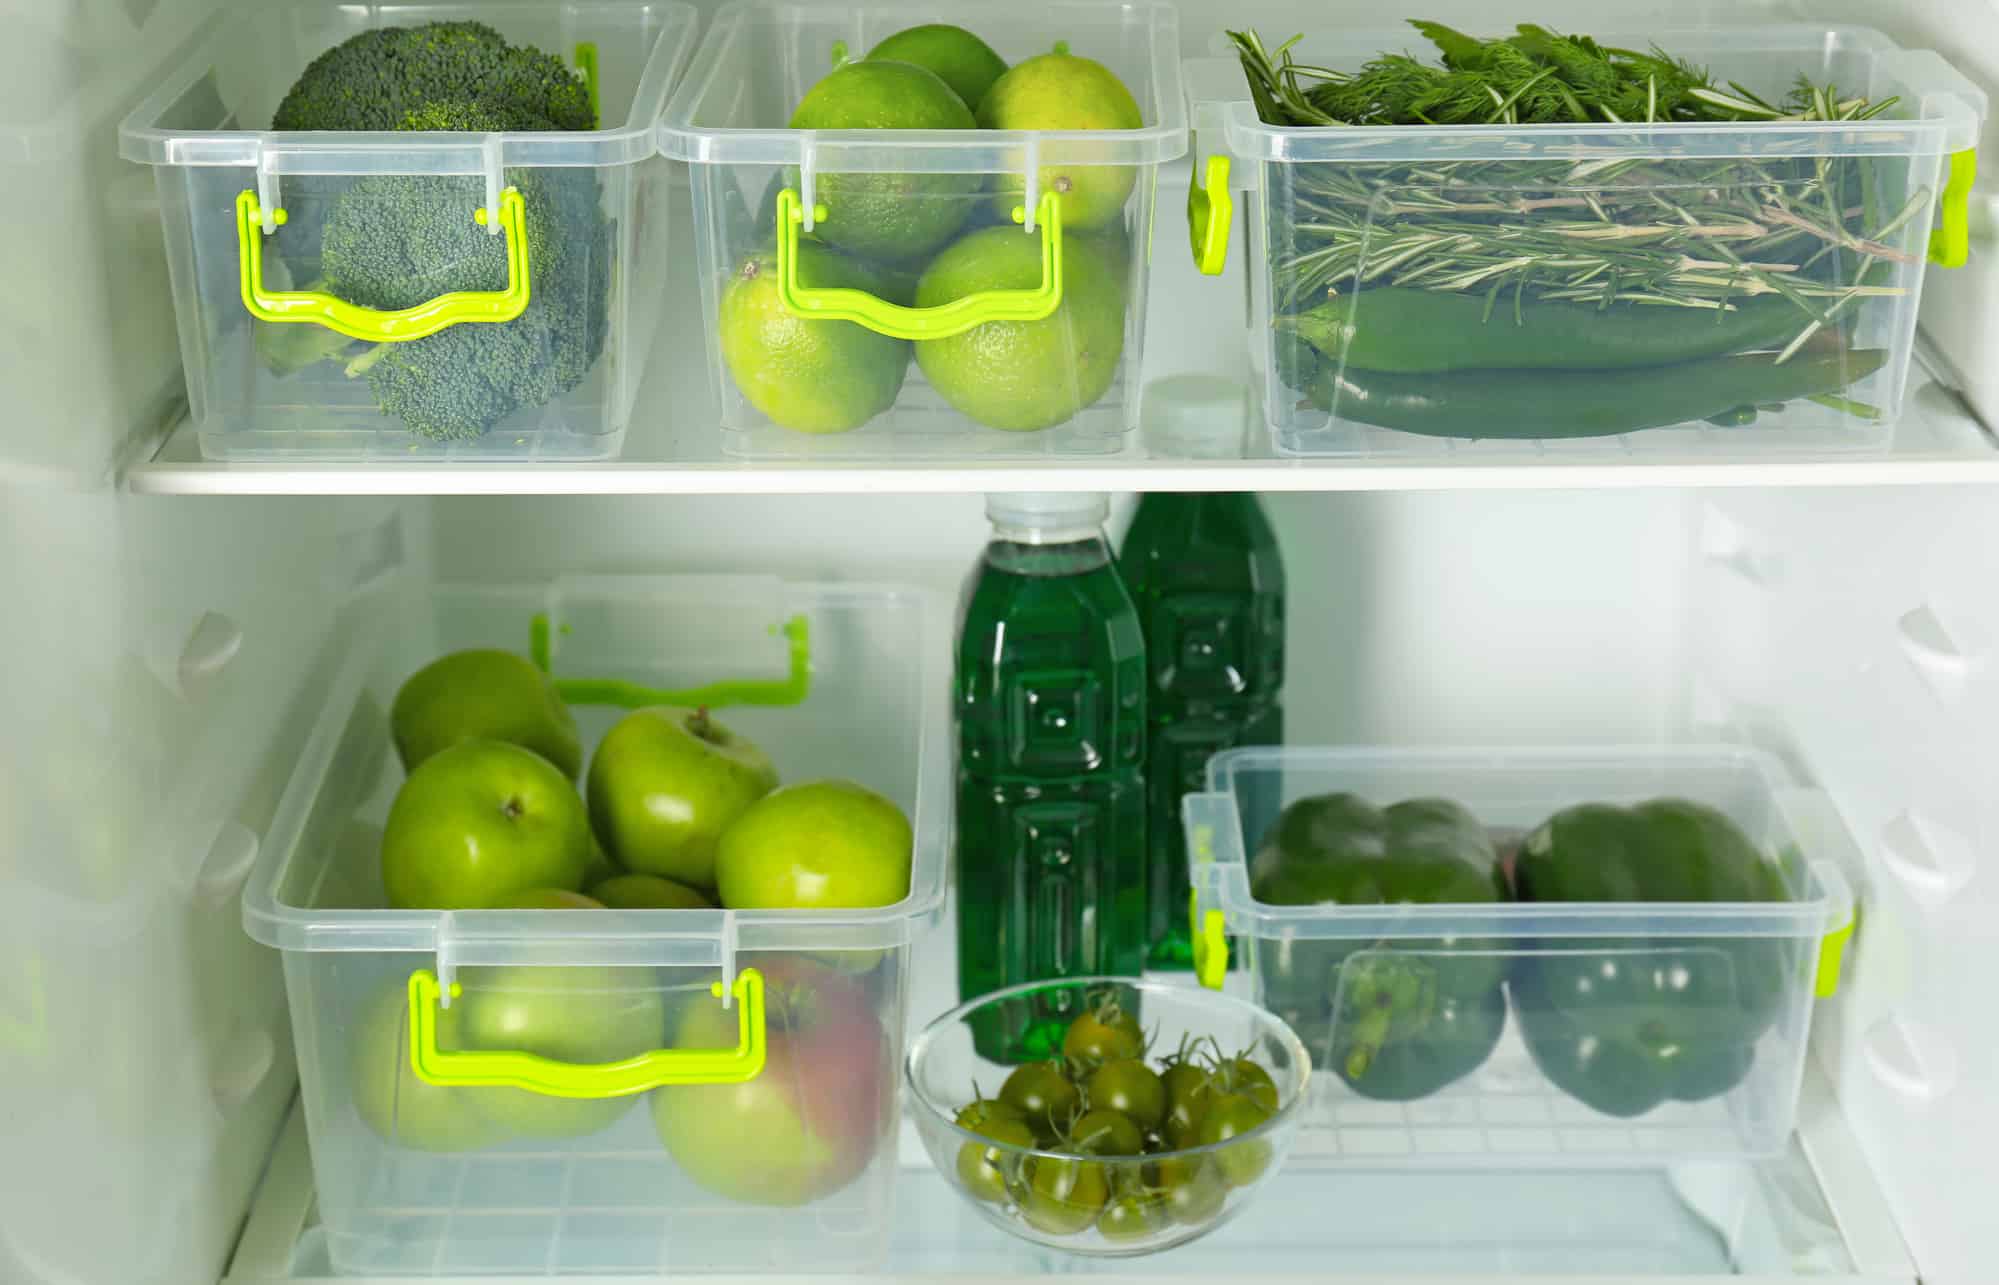 Fridge organization hacks. How to organize your fridge and freezer ...